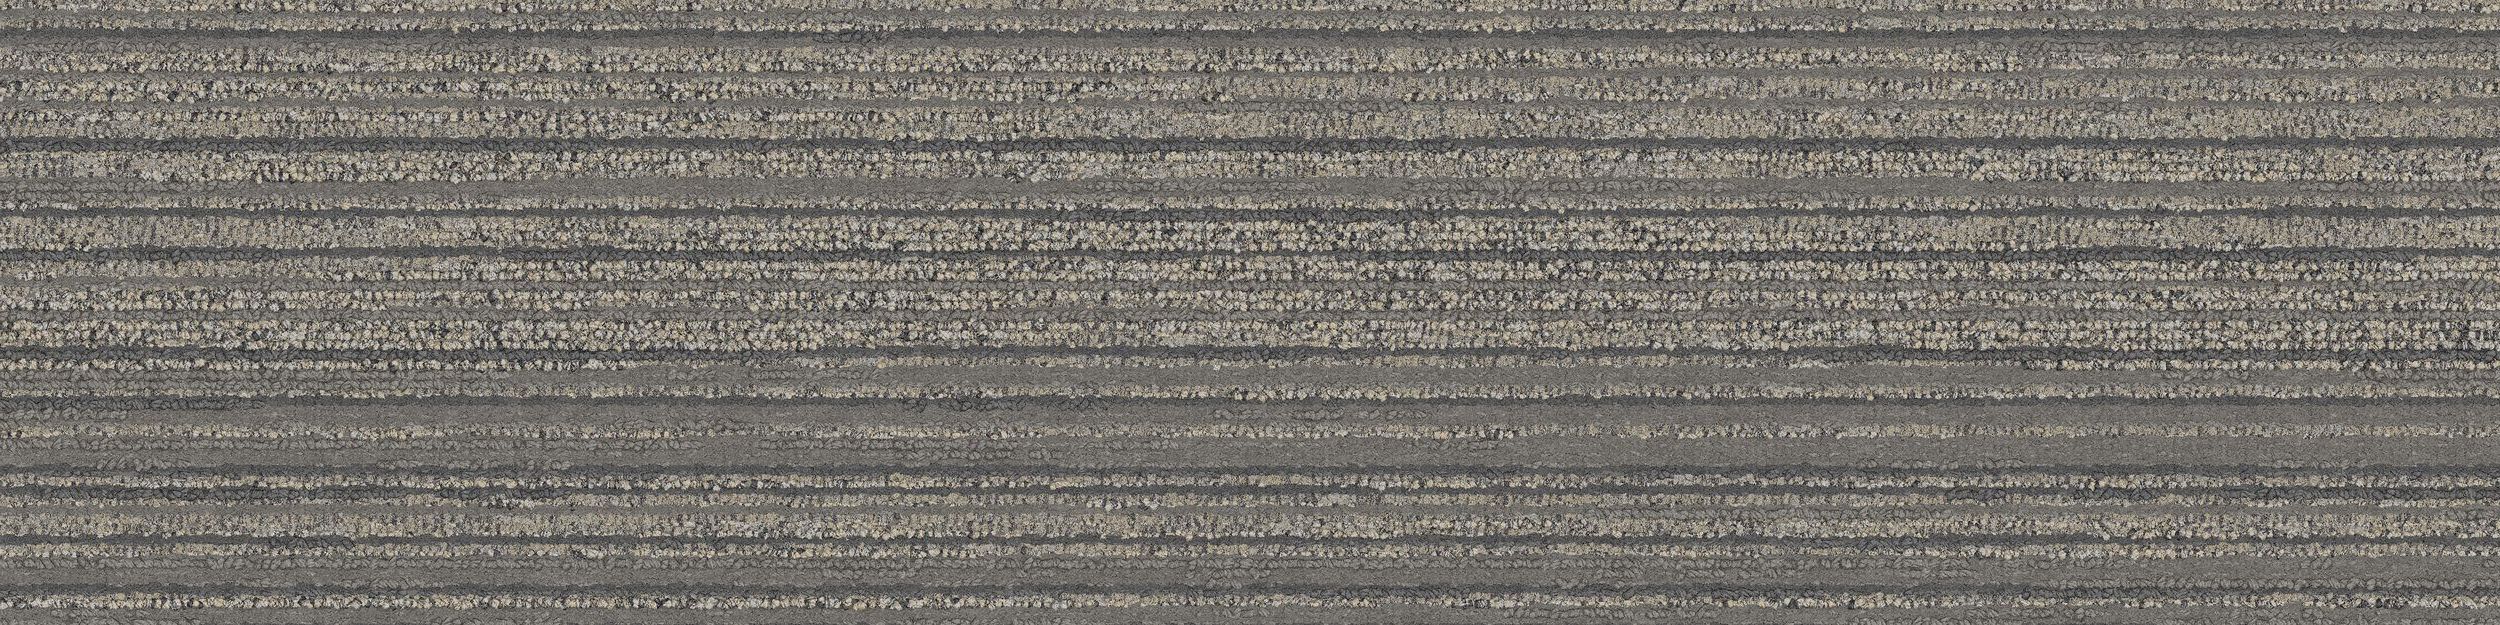 RMS 509 Carpet Tile In Cyprus imagen número 2